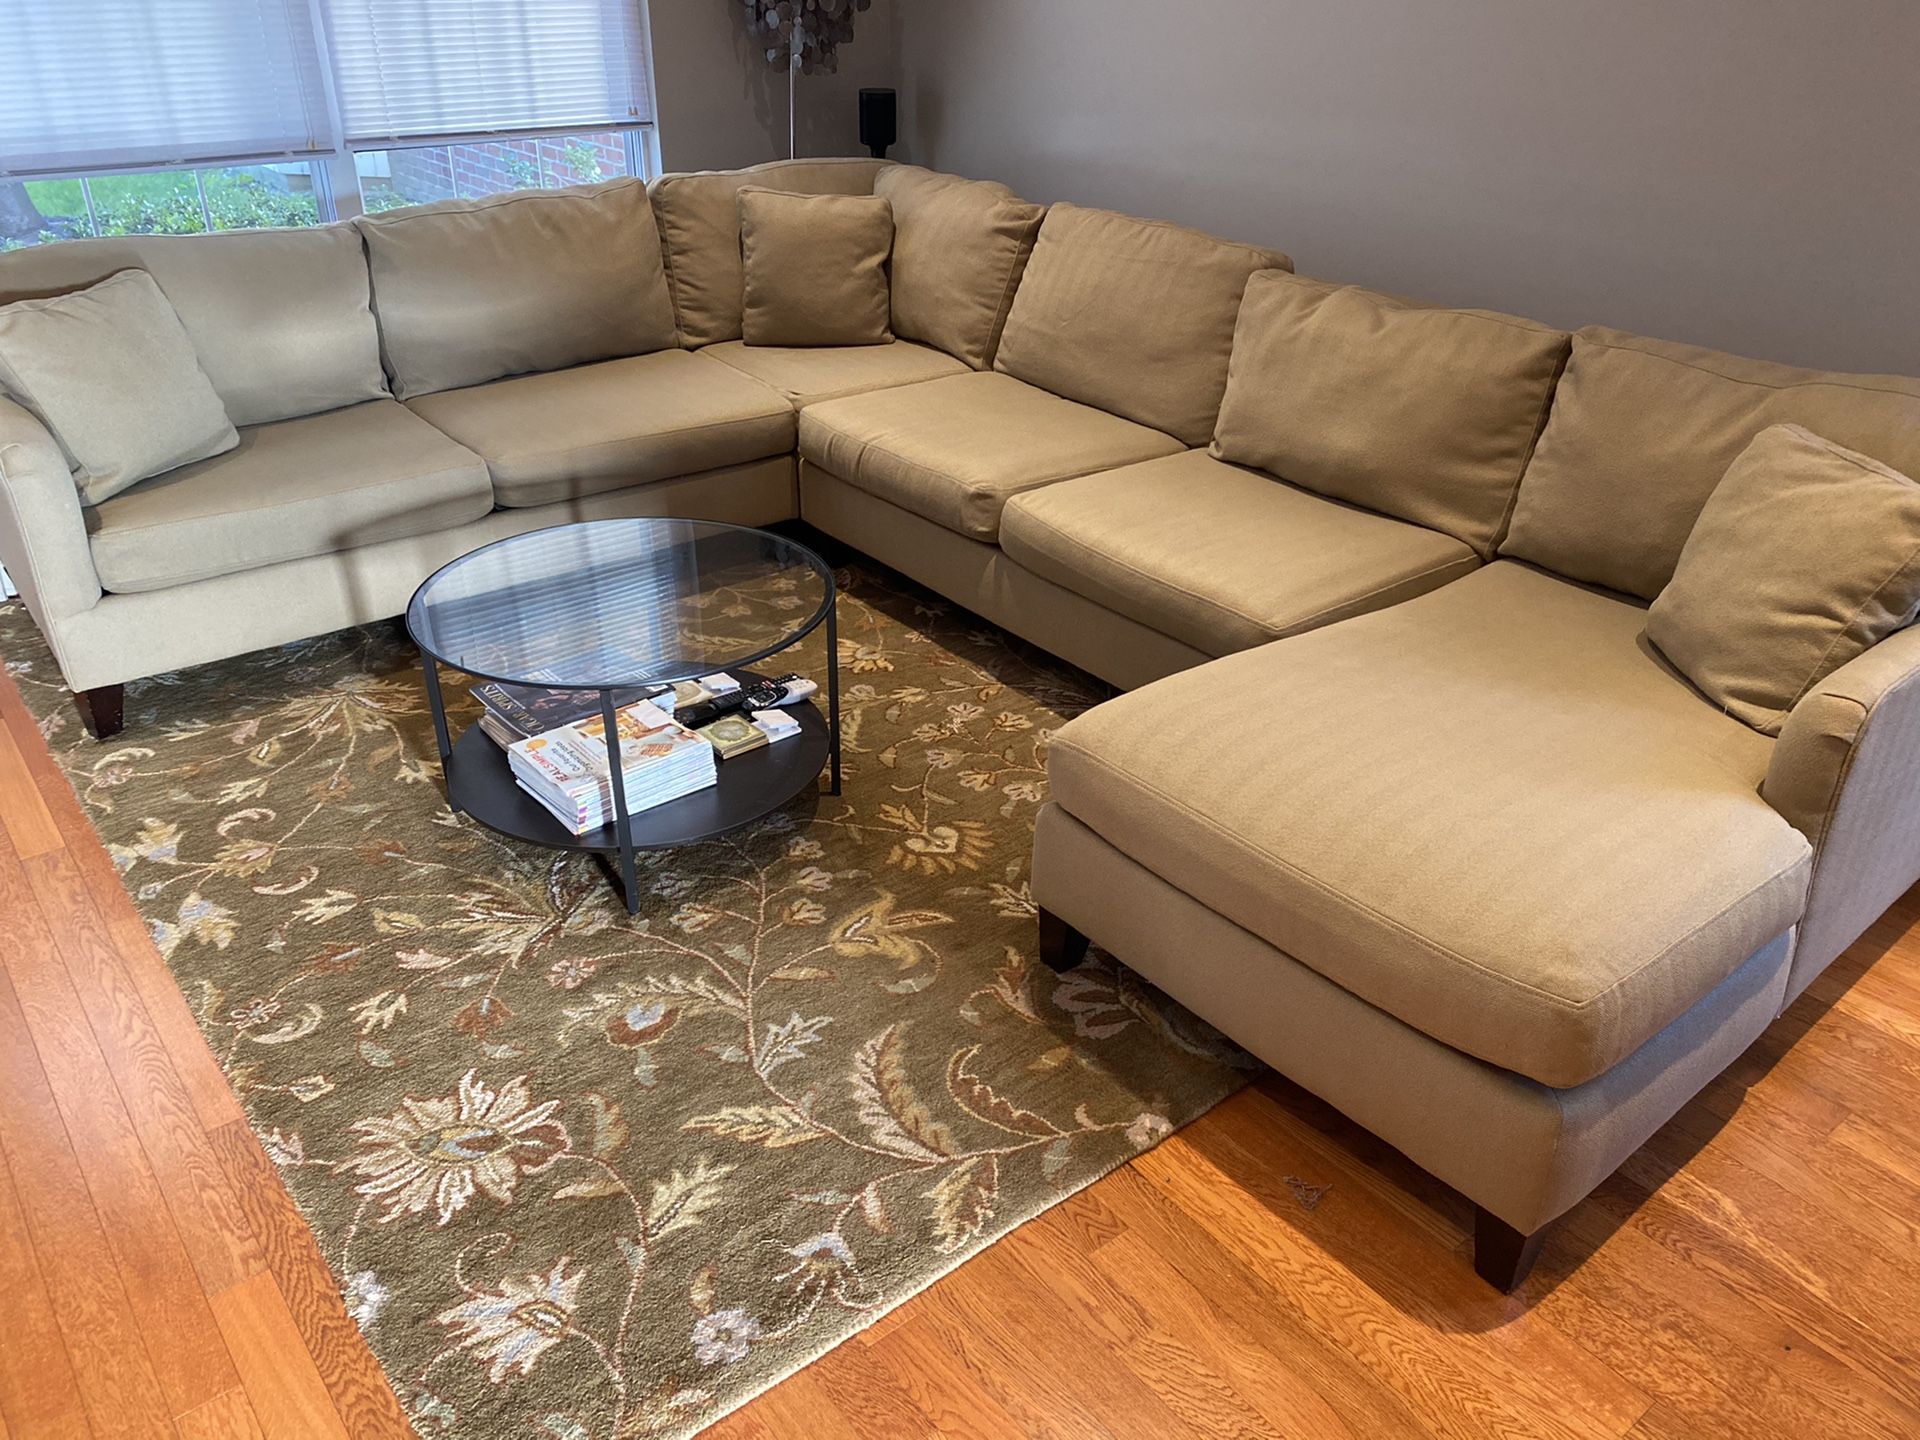 4-piece Max Home sectional sofa, 7X10 area rug & glass coffee table